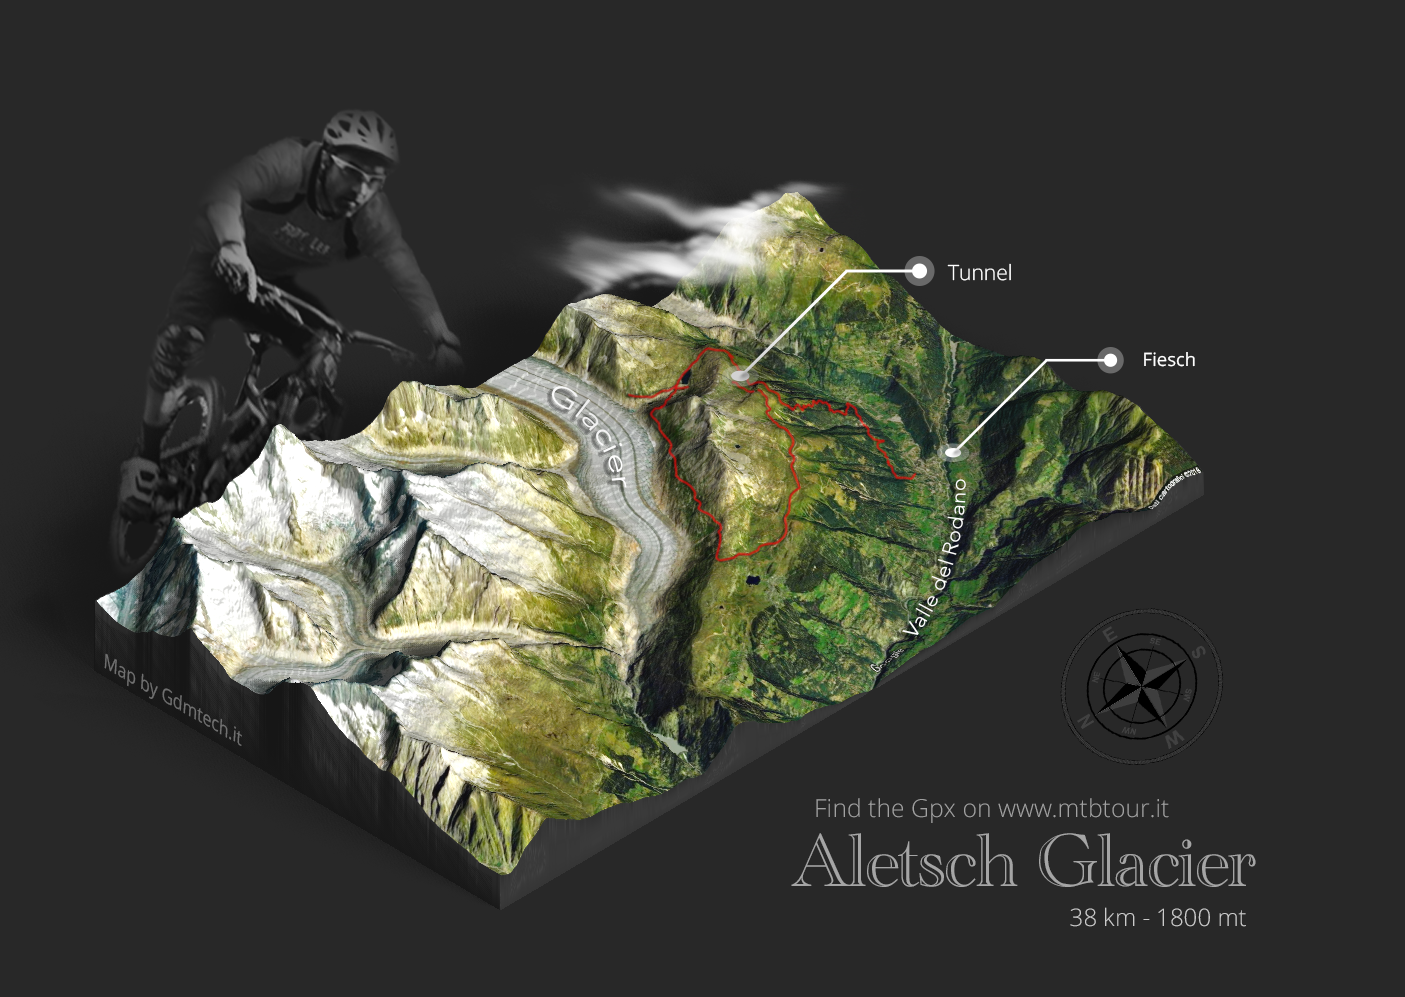 Mappa 3D del percorso Mtb dell’Aletsch Glacier